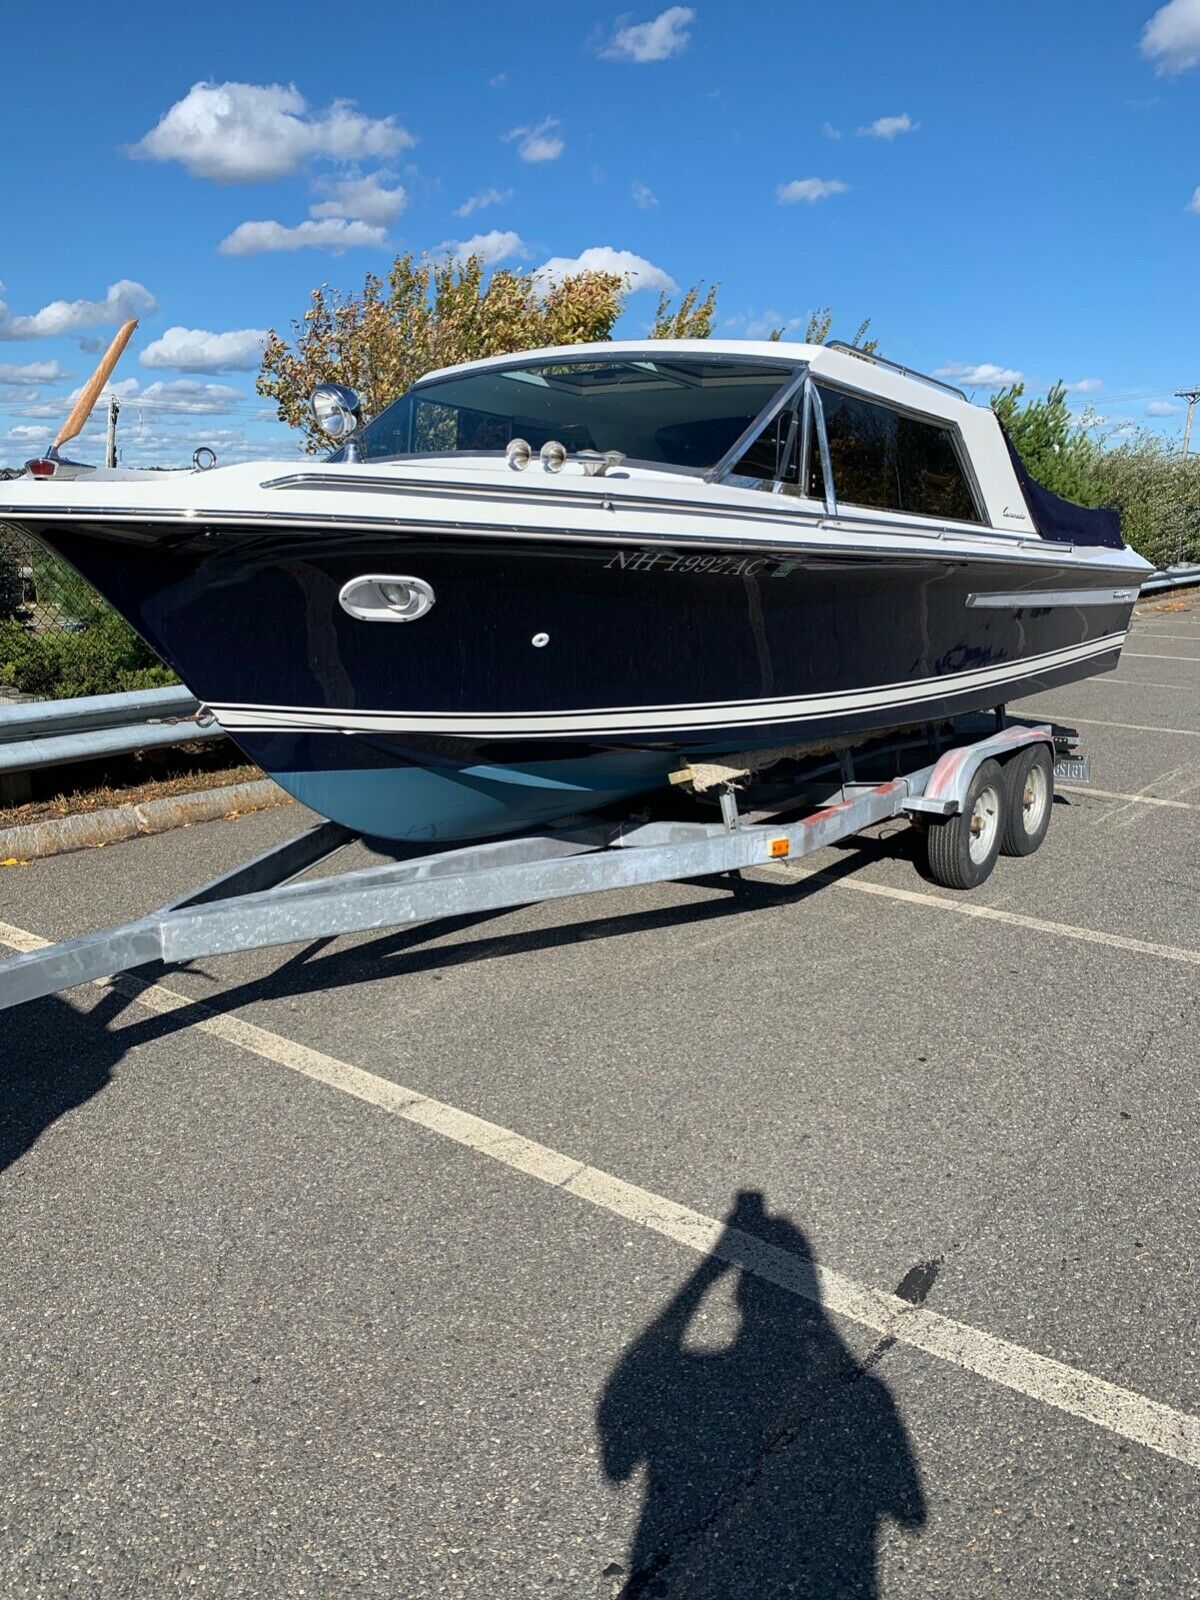 22 Coronado Centry Speed Boat All Original With Chrysler 440 375hp Inboard